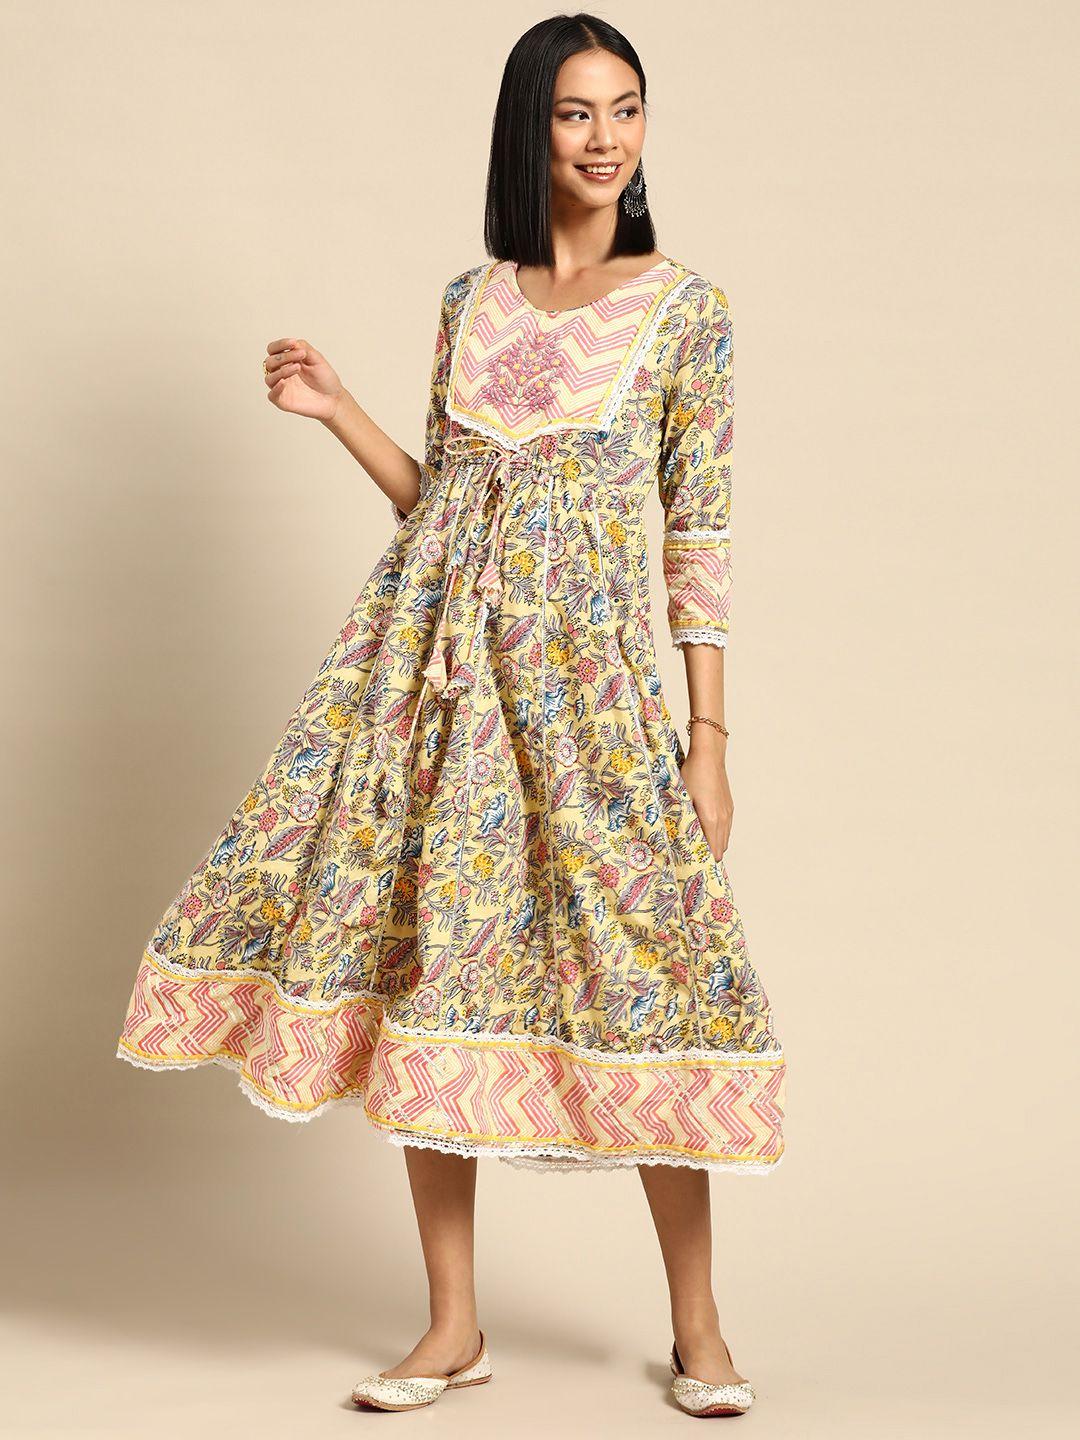 rangmayee-floral-embroidered-a-line-midi-dress